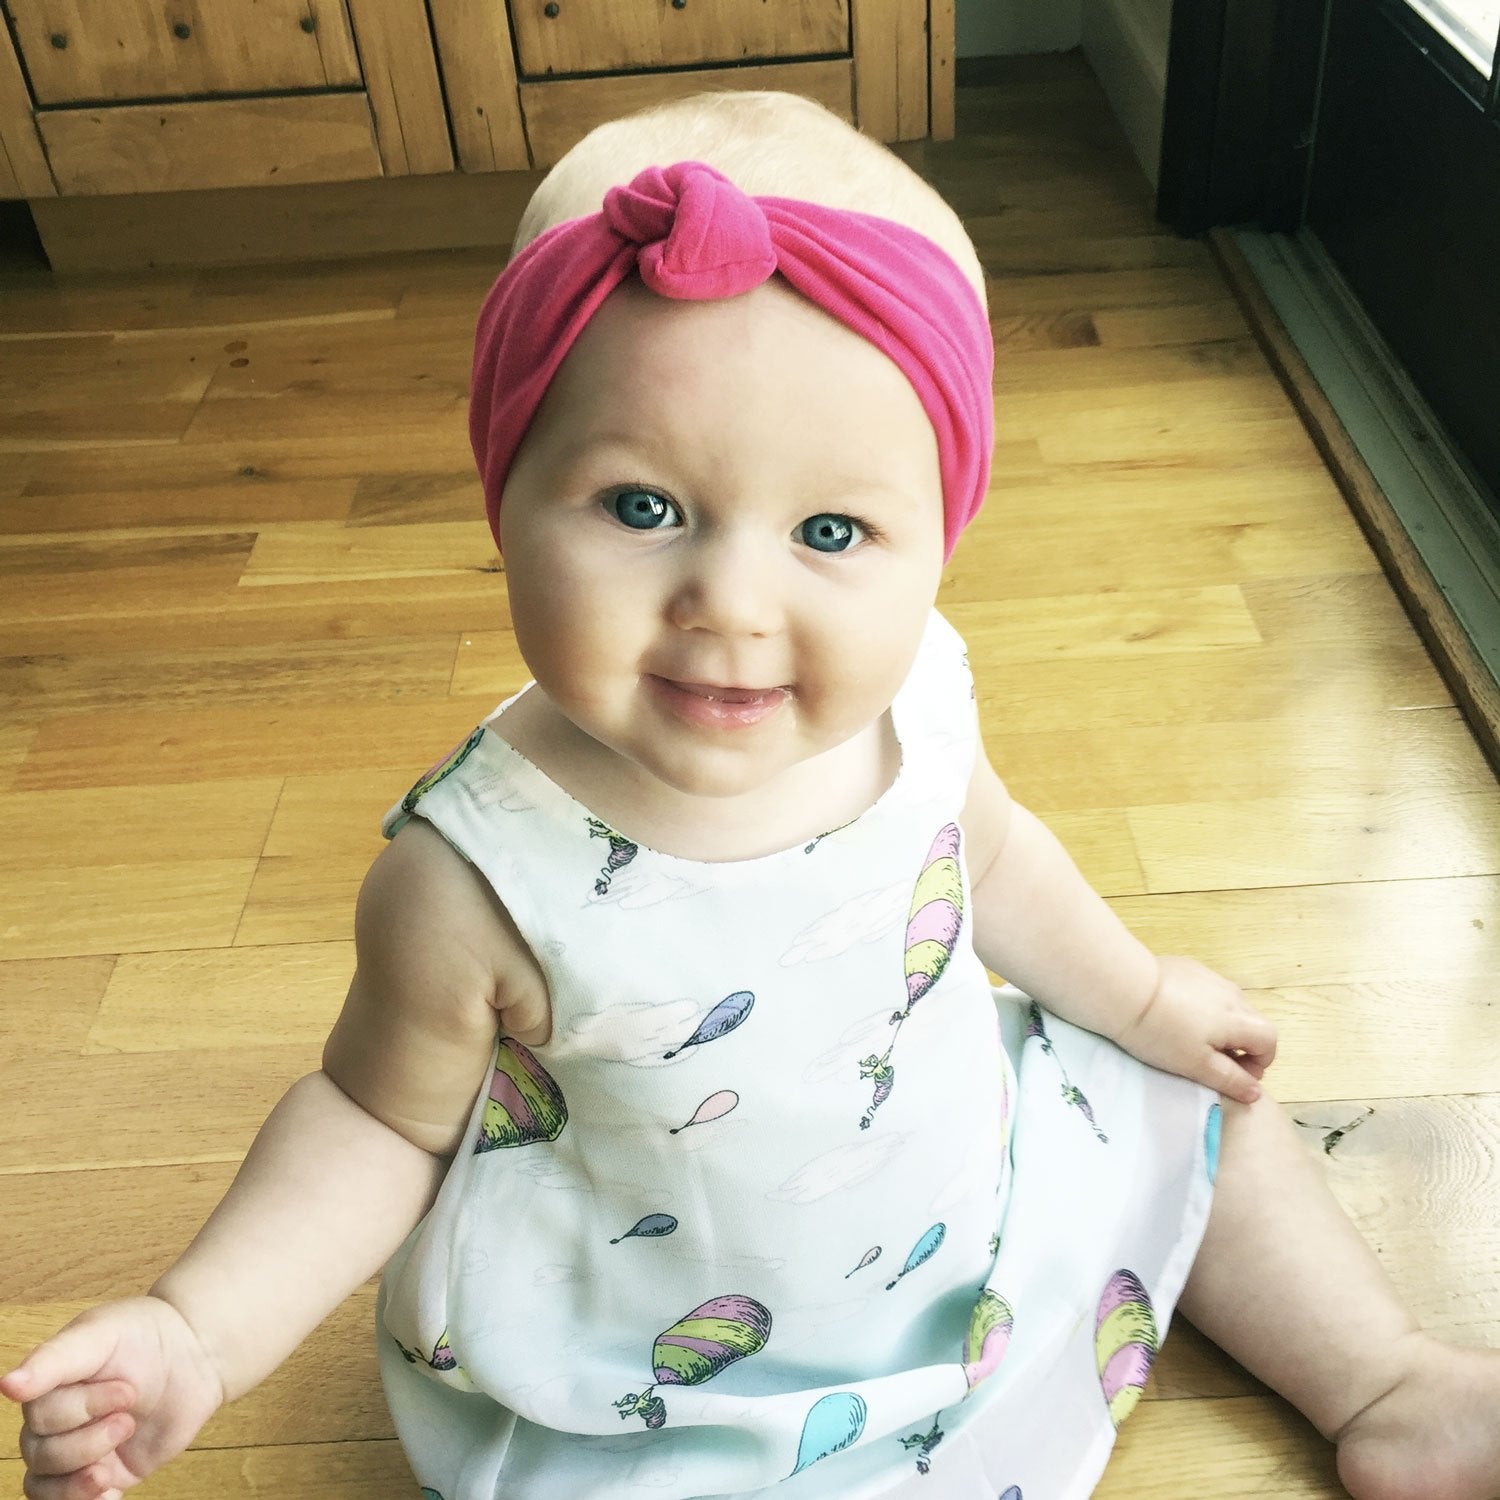 Infant Headwrap - Turban Knot Headband - Coral Baby Wisp